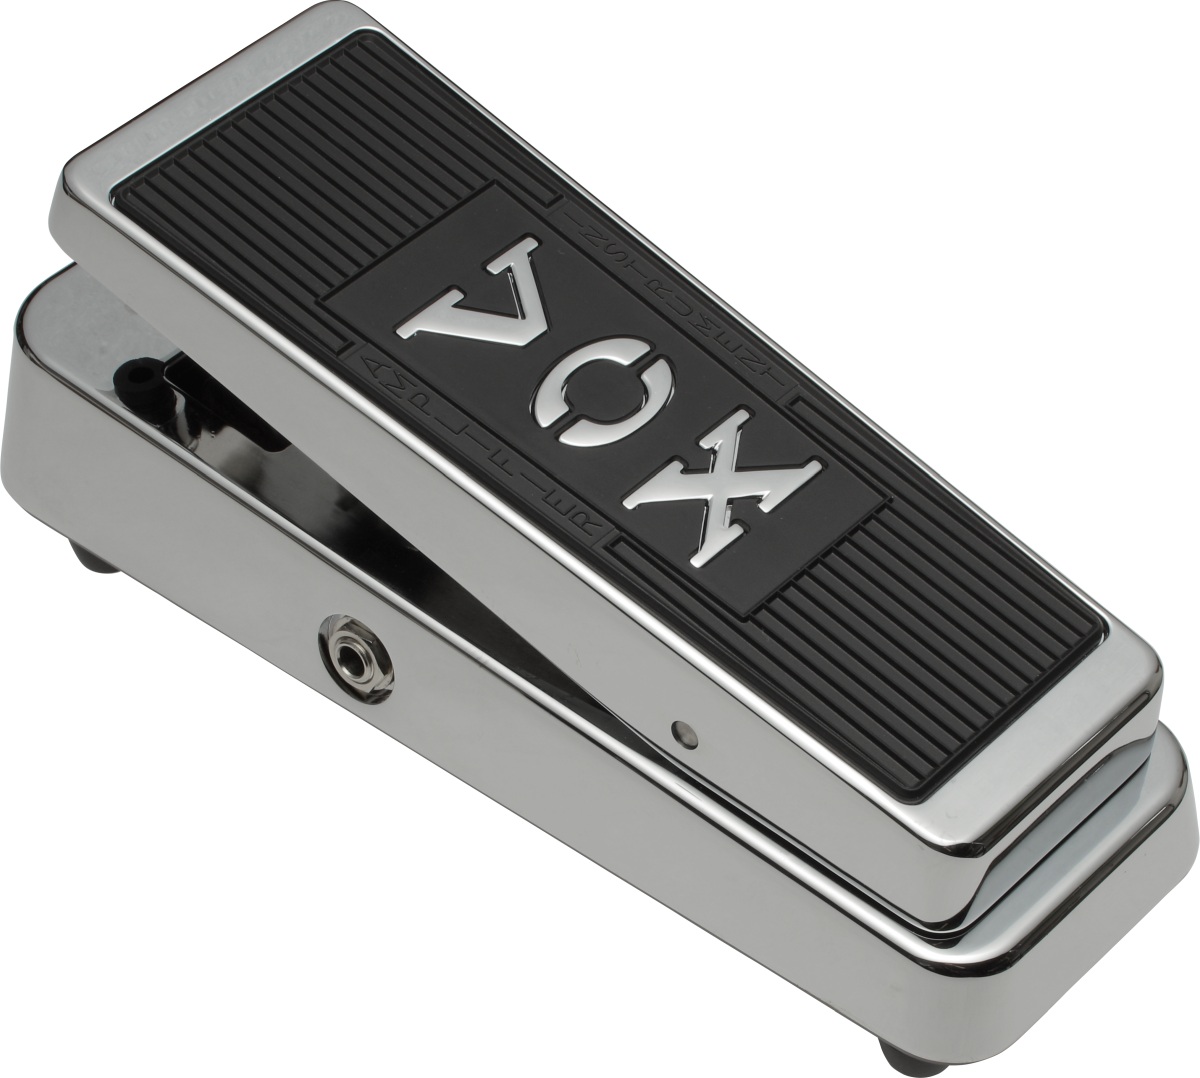 Vox Vrm-1 Real McCoy LTD - Limited Wah Pedal